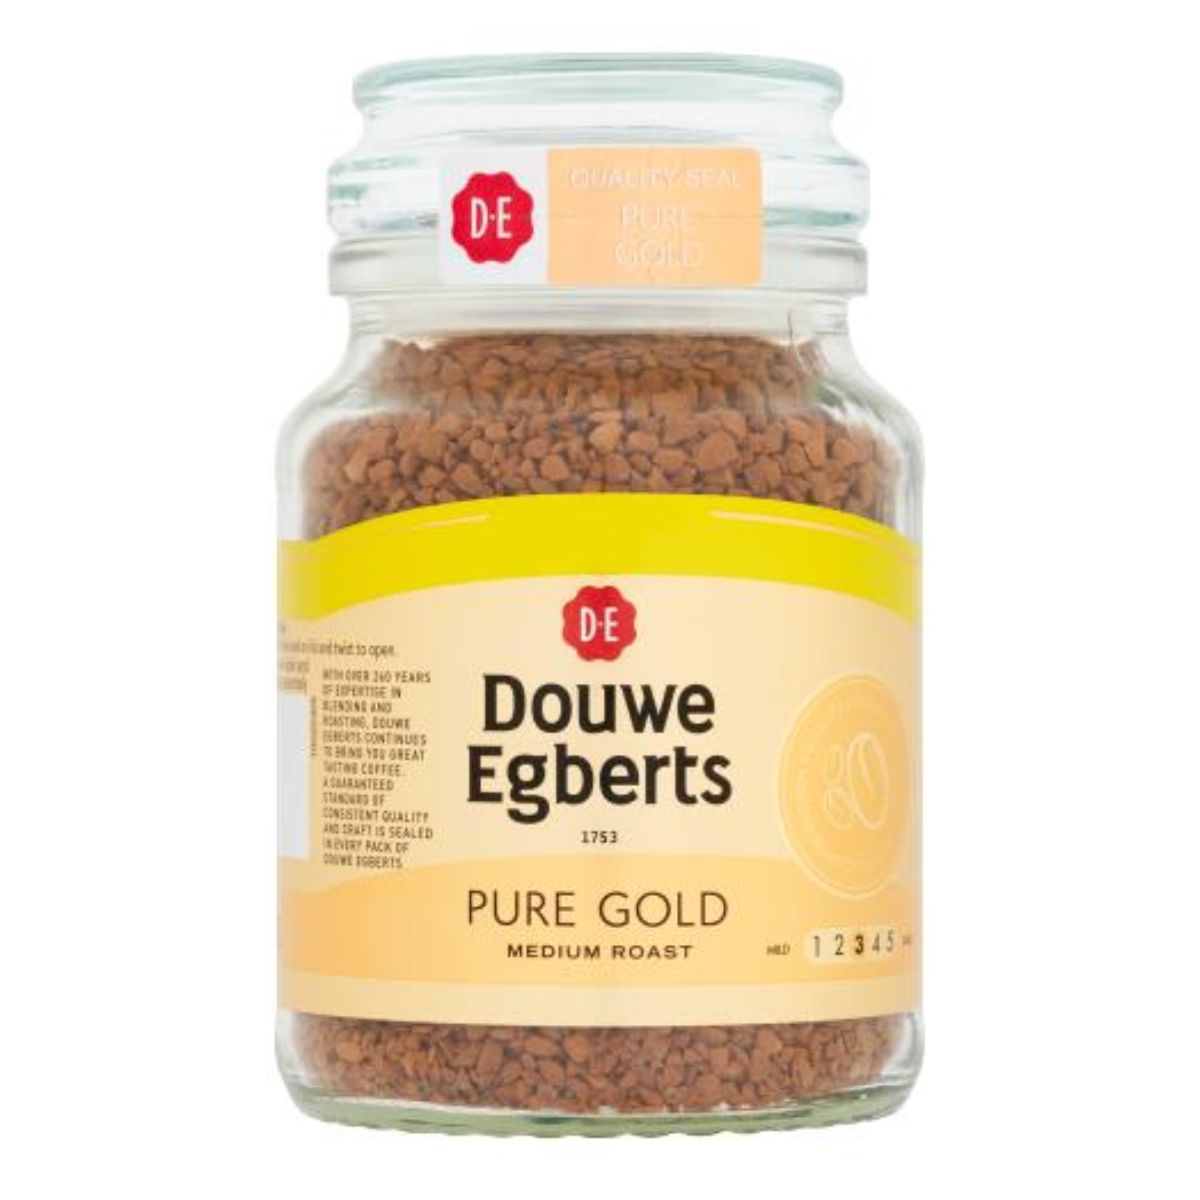 A jar of Douwe Egberts - Pure Gold Medium Roast - 95g.